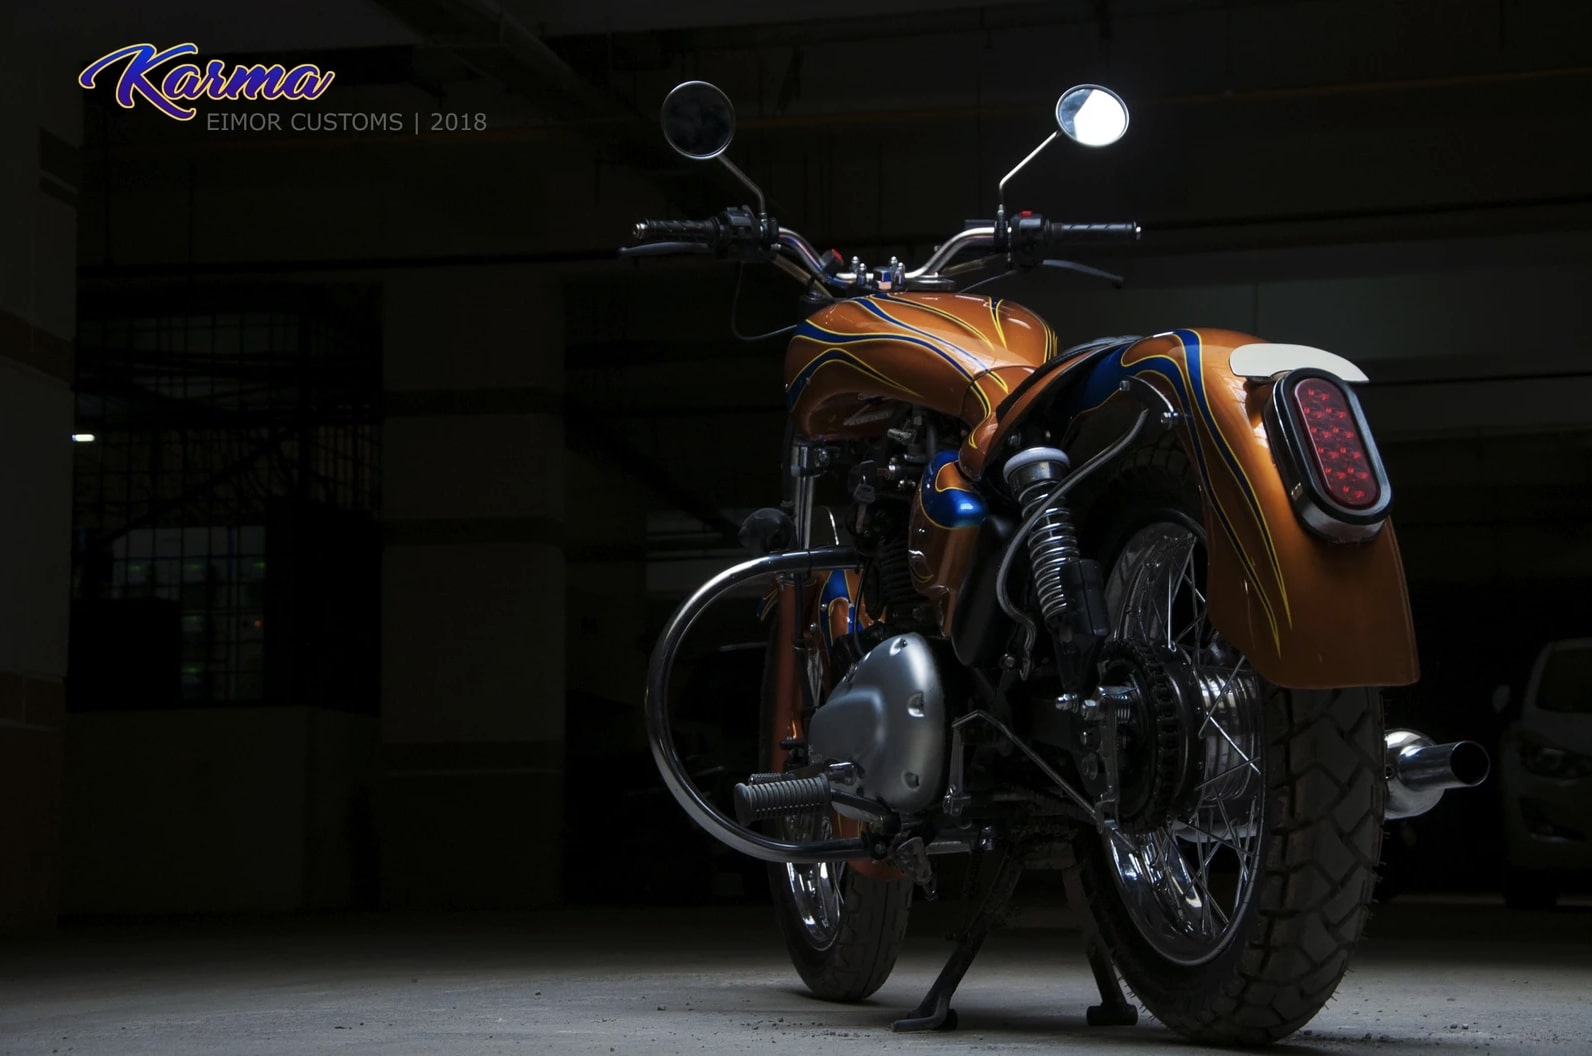 Meet Karma 350 - Based on the Royal Enfield Thunderbird Motorcycle - photo